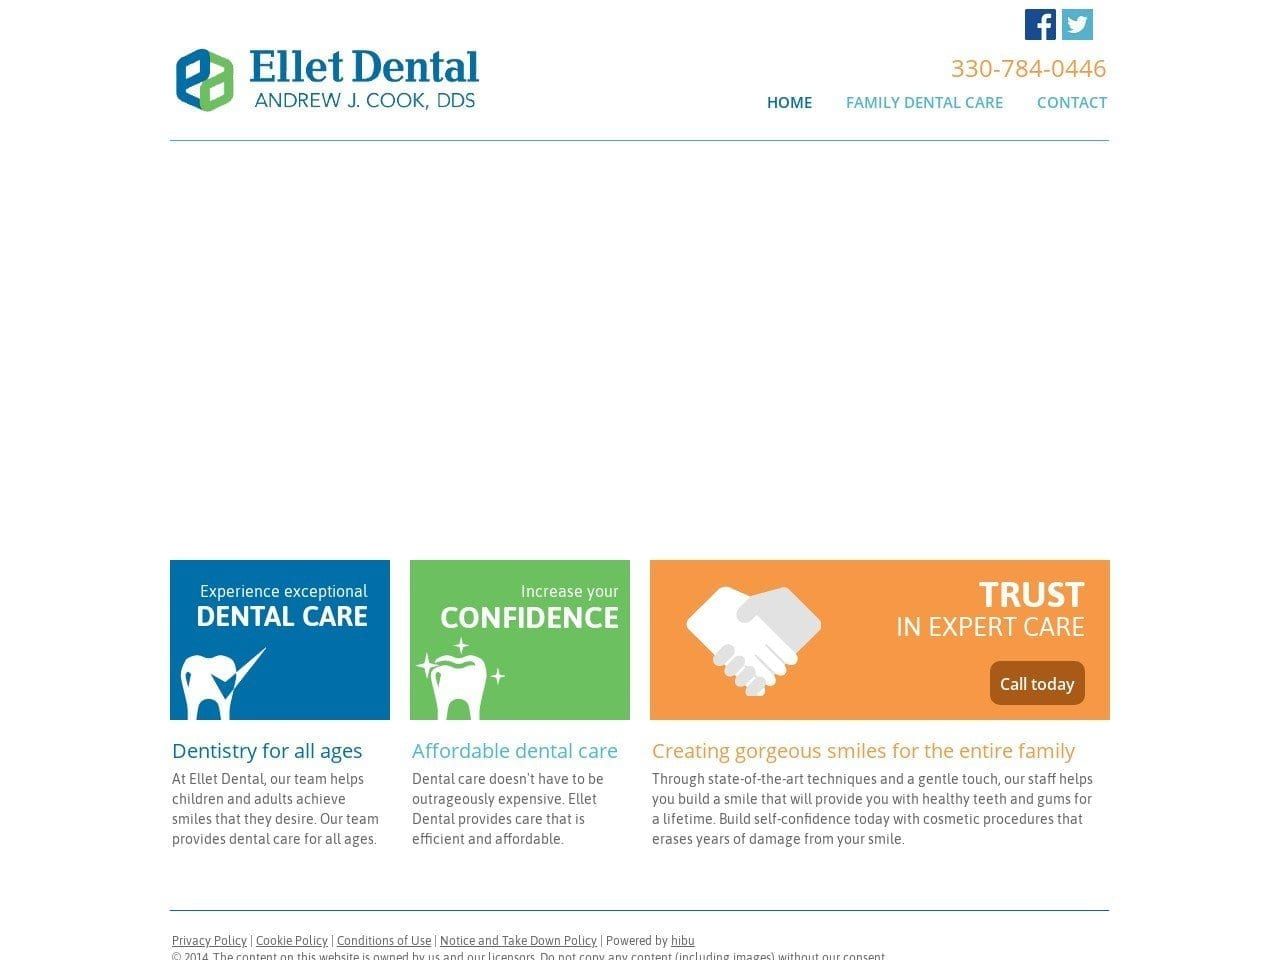 Ellet Dental Website Screenshot from elletdental.com